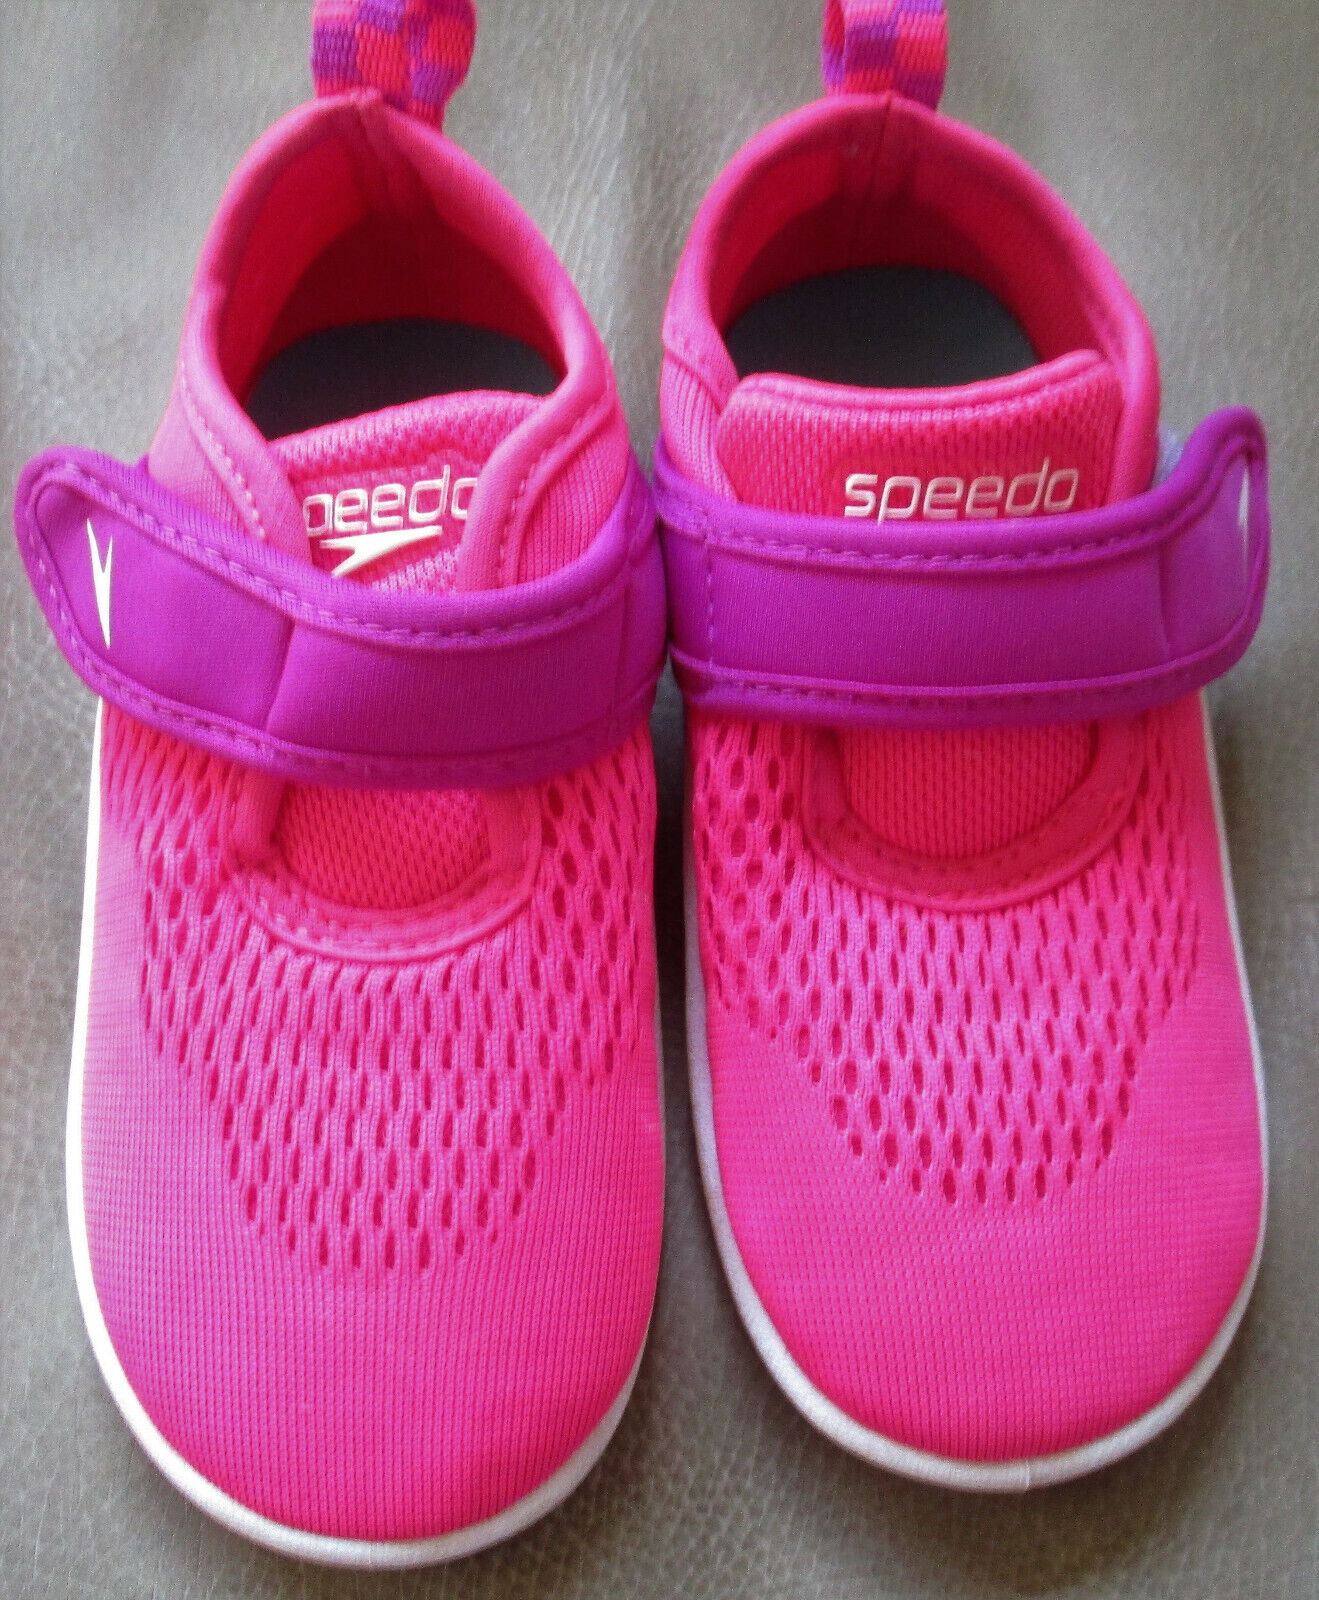 Speedo Surfwalker Pink Water Shoes Size M Fits 7 8